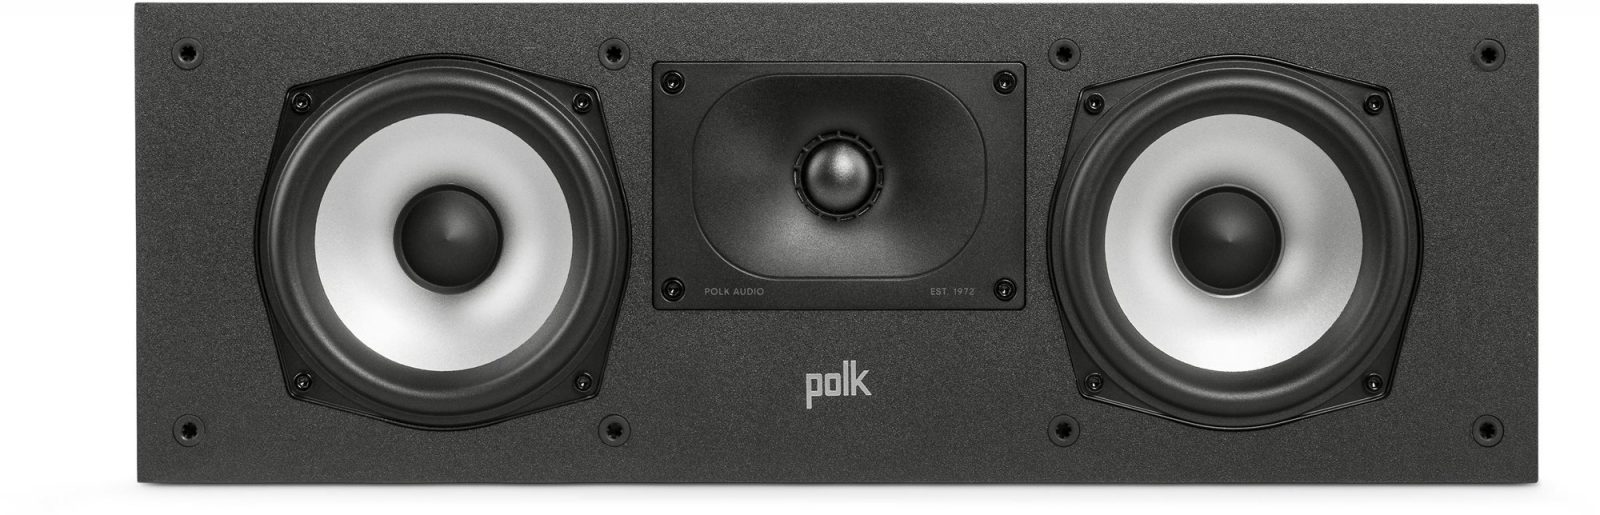 Hangszóró Polk Monitor XT30C fekete (1 db)